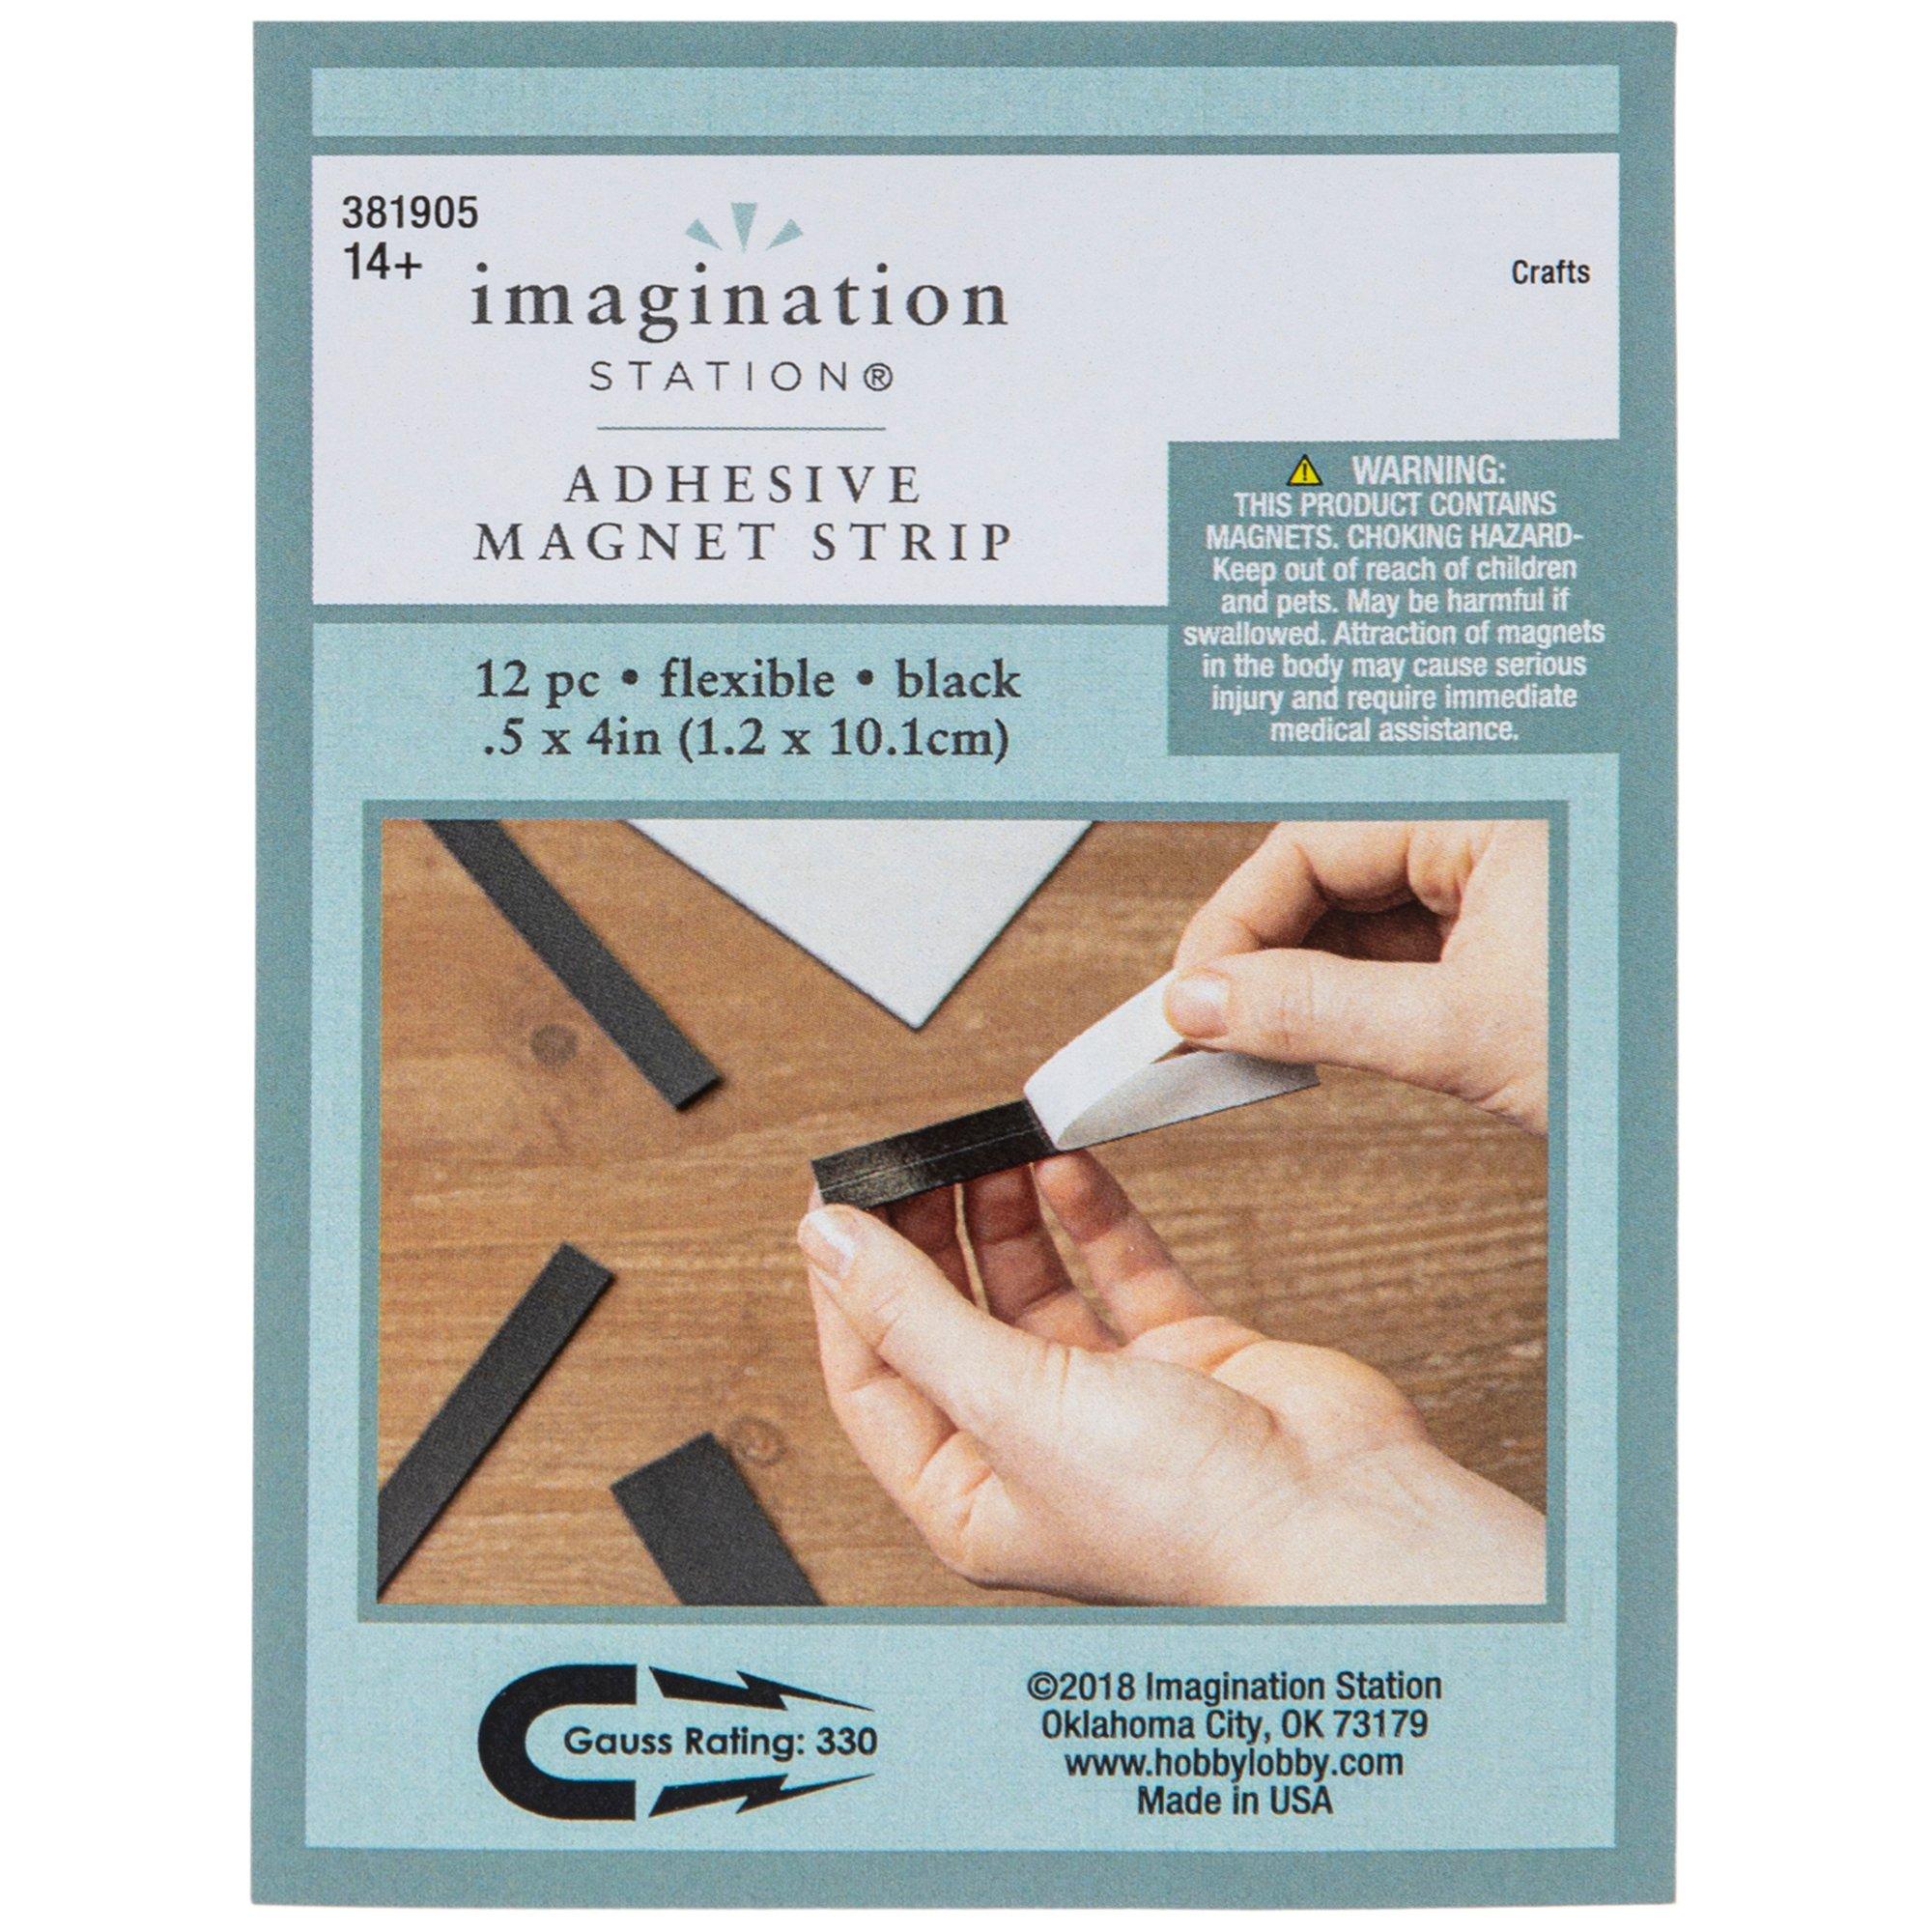 Adhesive Magnetic Sheets 5 PCs - Flexible Magnet Sheets